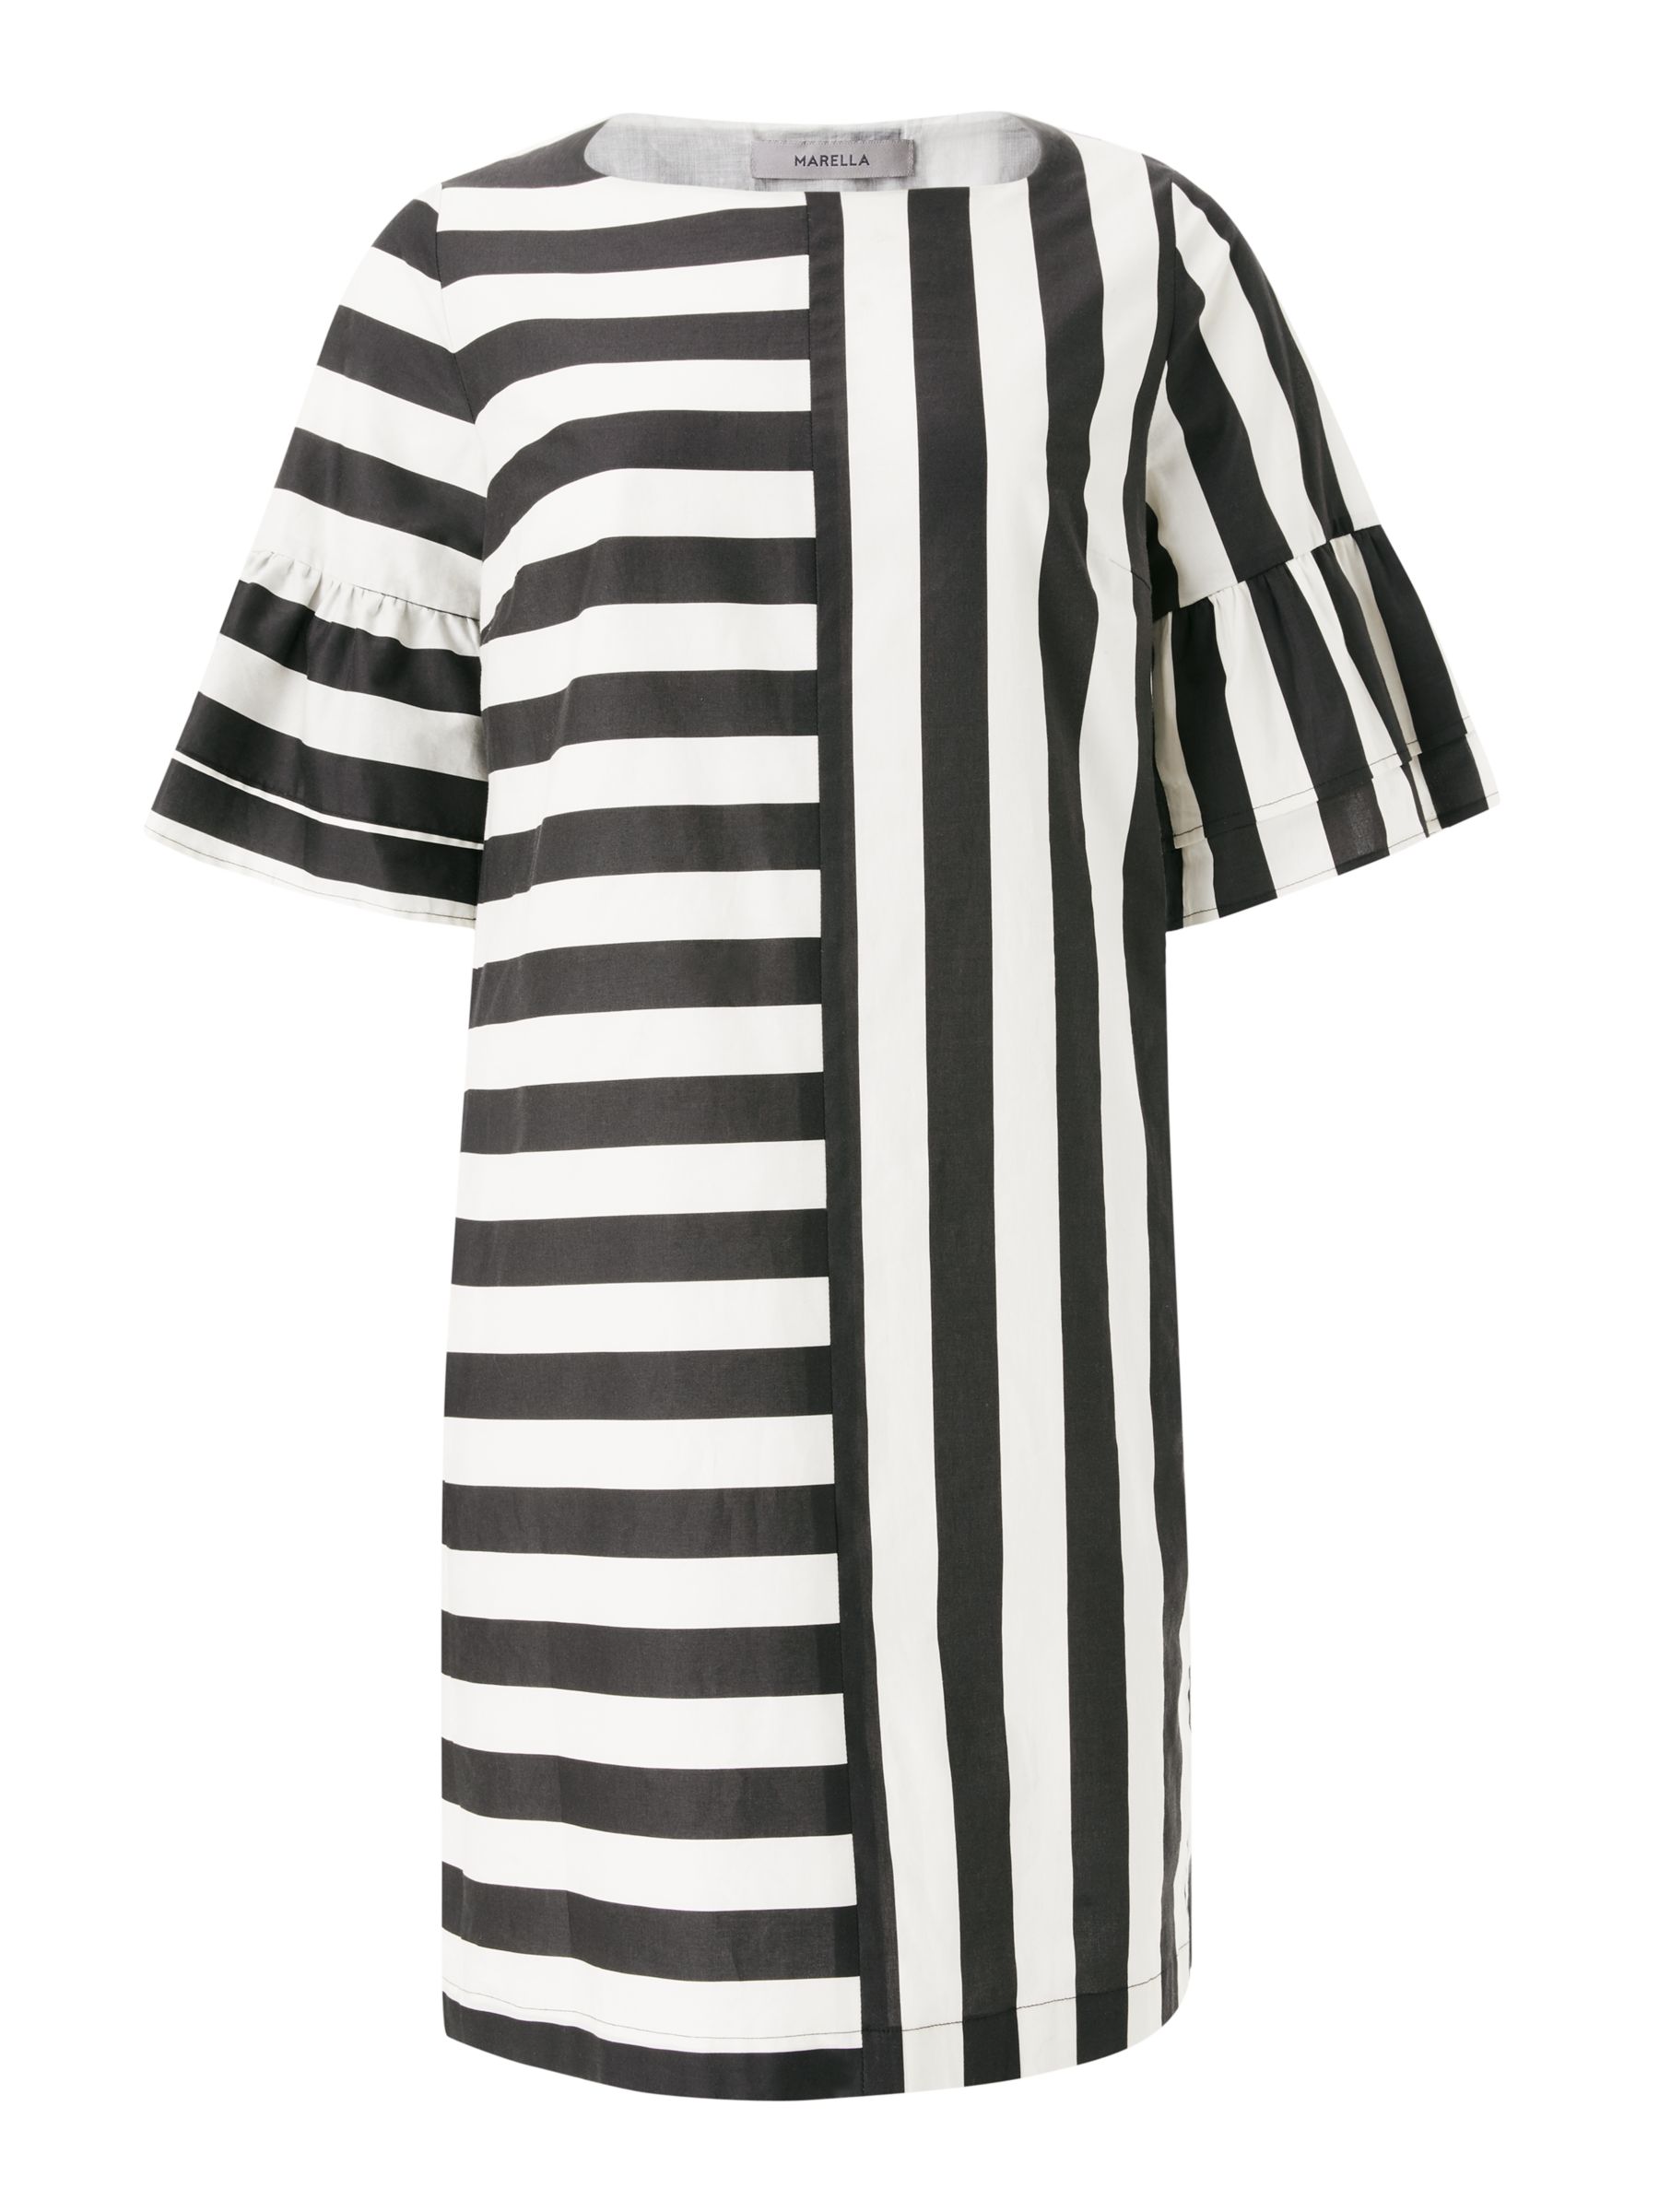 Marella Stripe Dress, Black/White at John Lewis & Partners